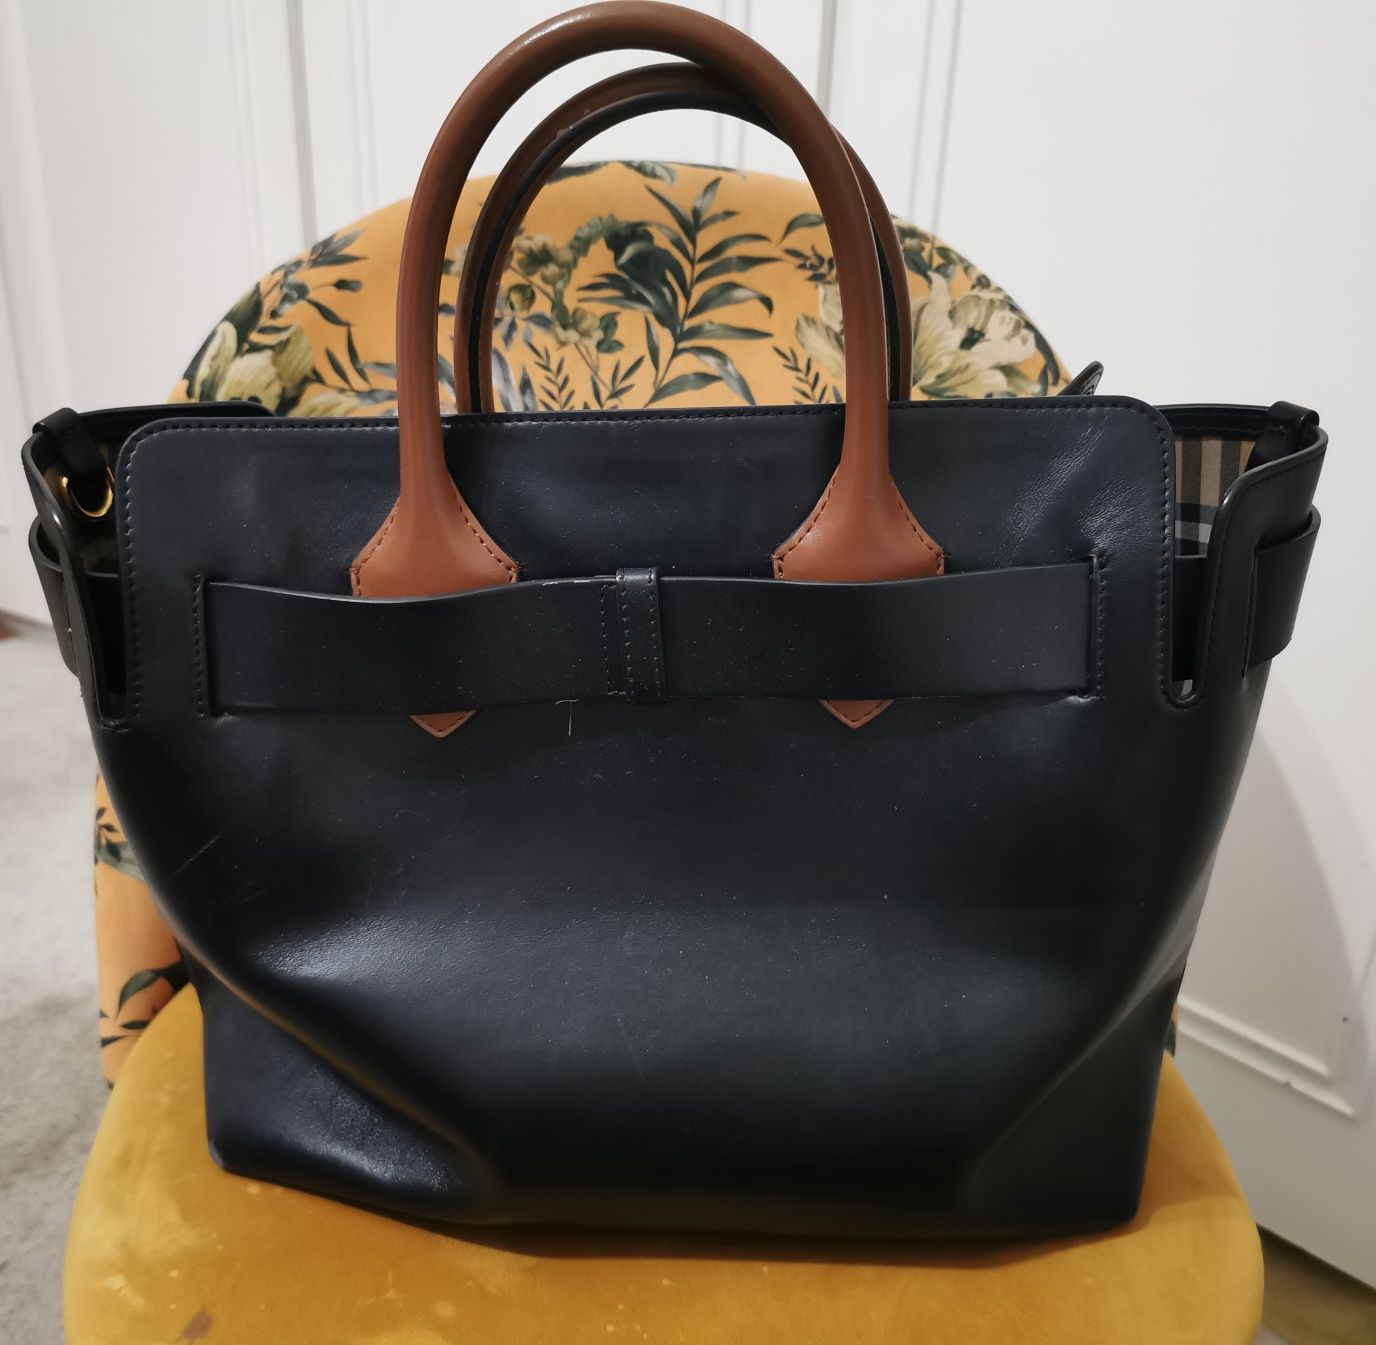 Mala Burberry bag leather